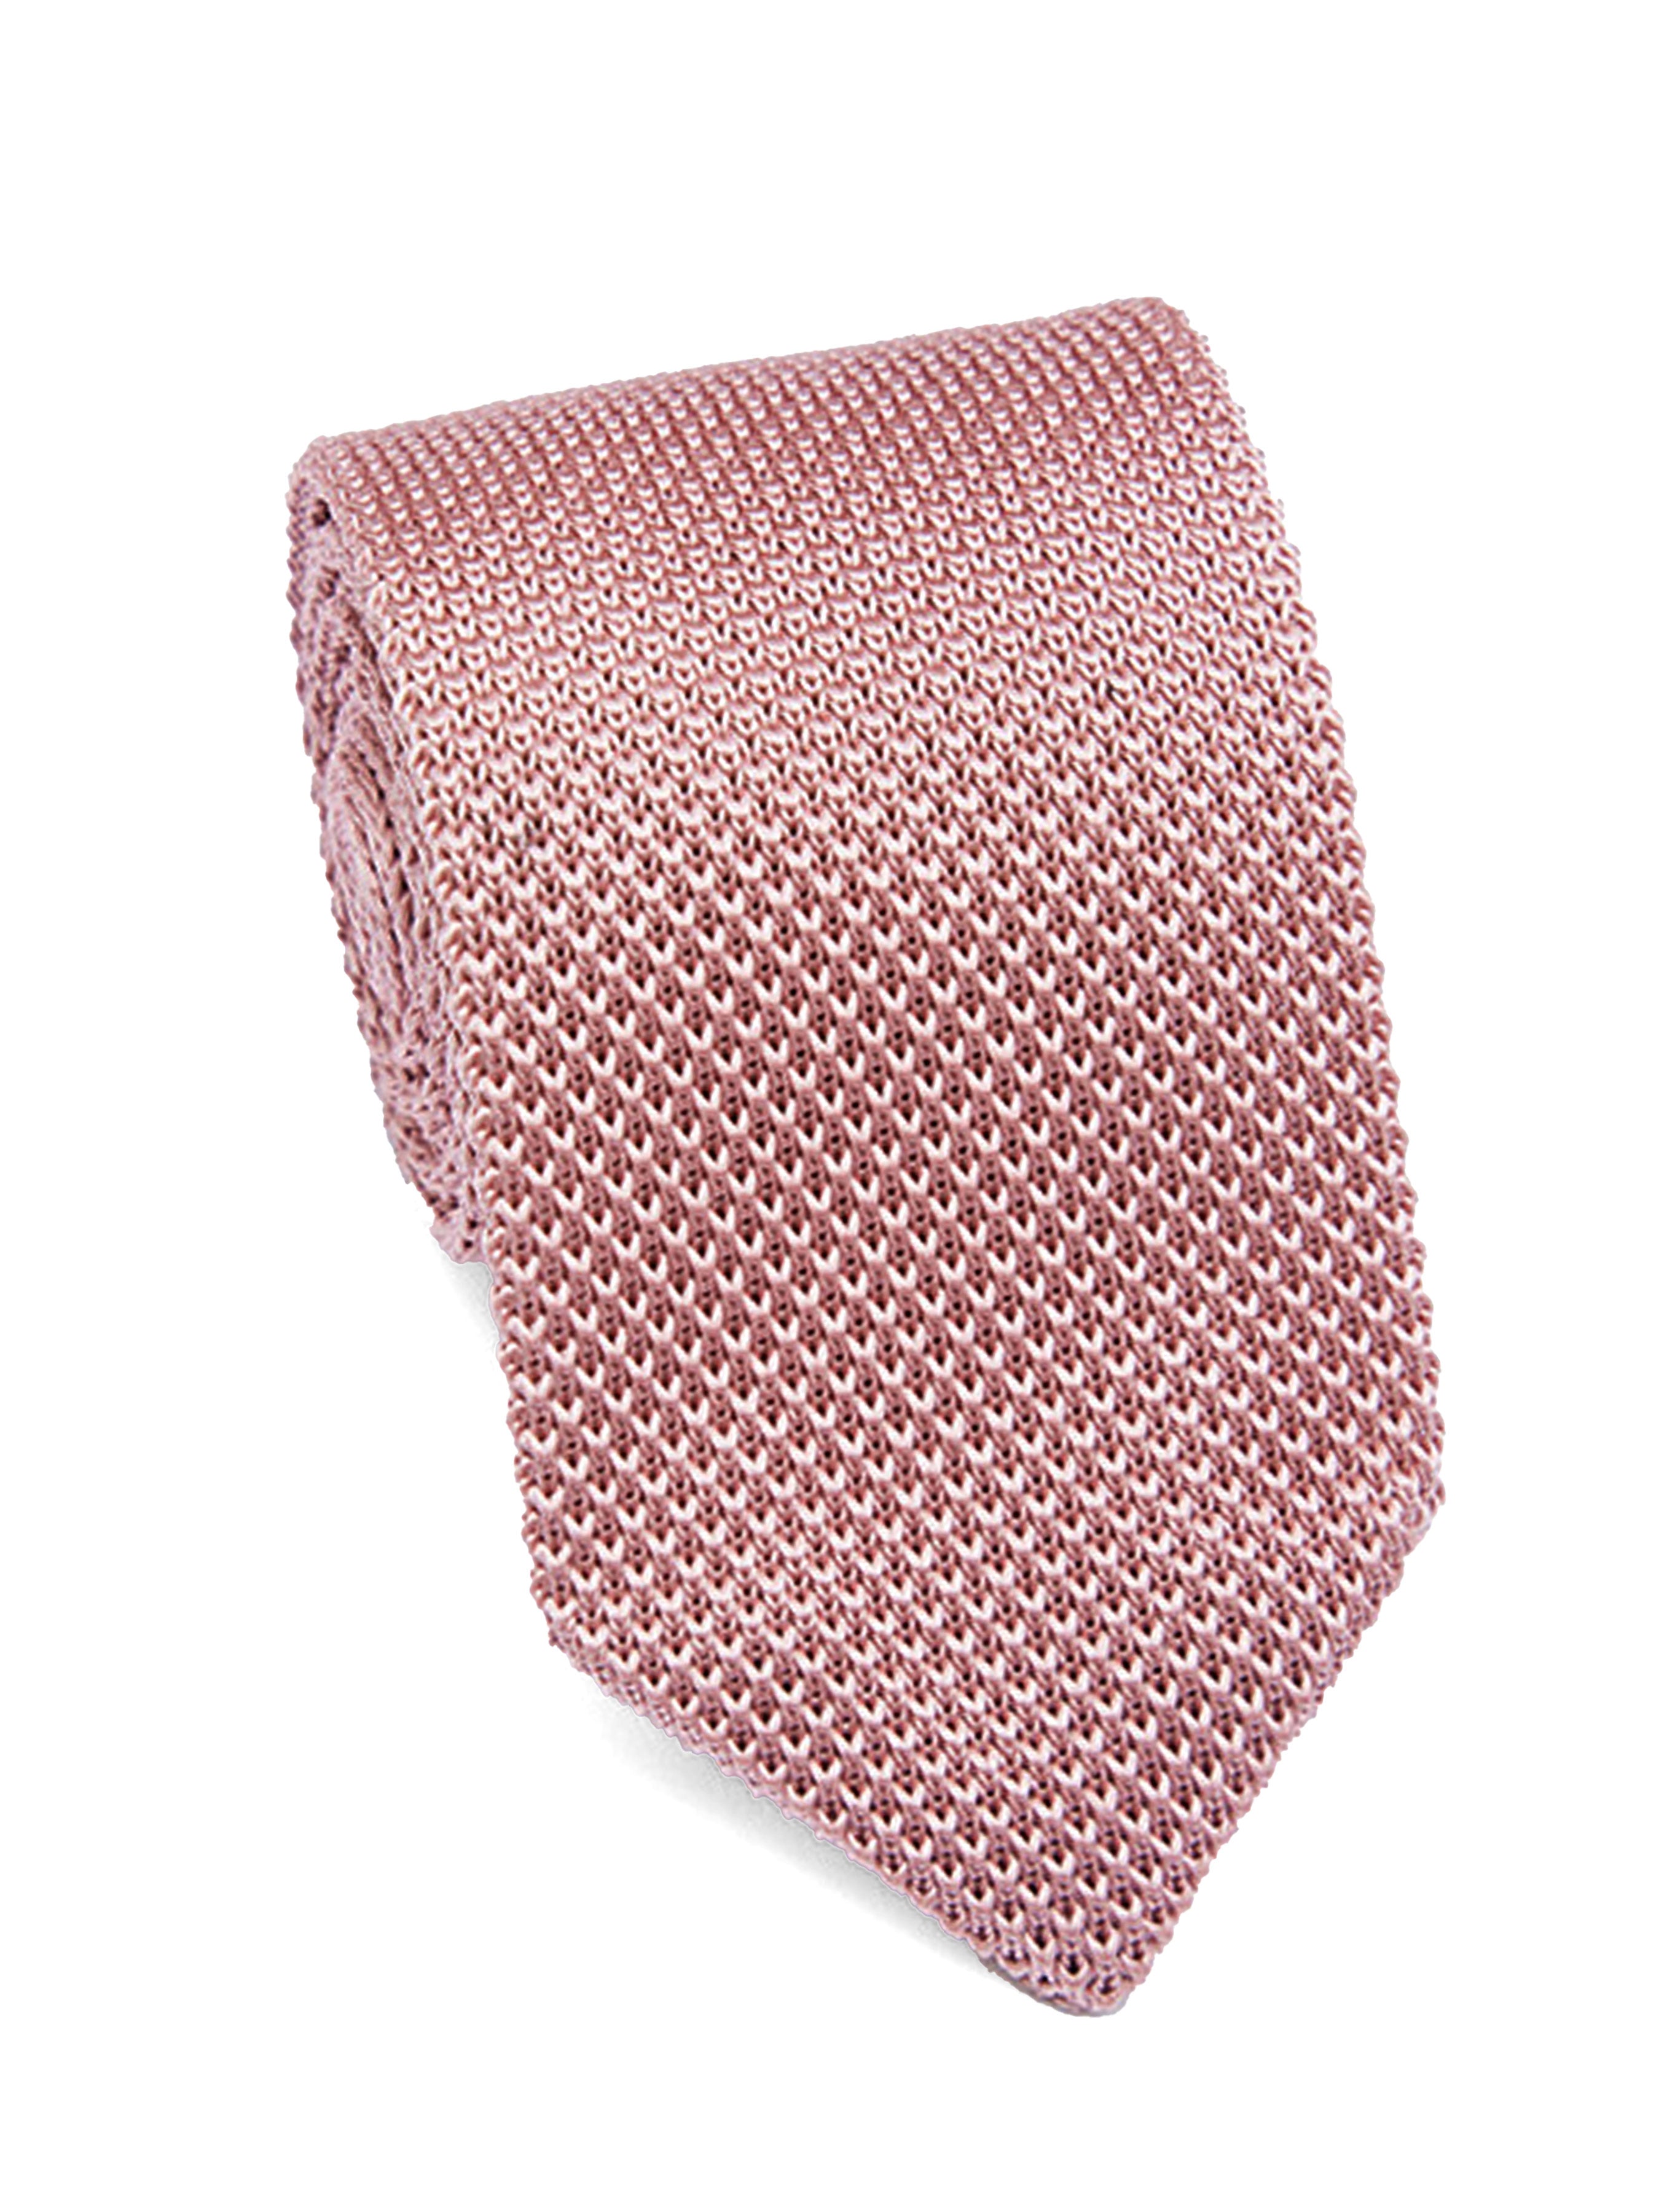 Knit Tie - Dusty Pink - Zeve Shoes